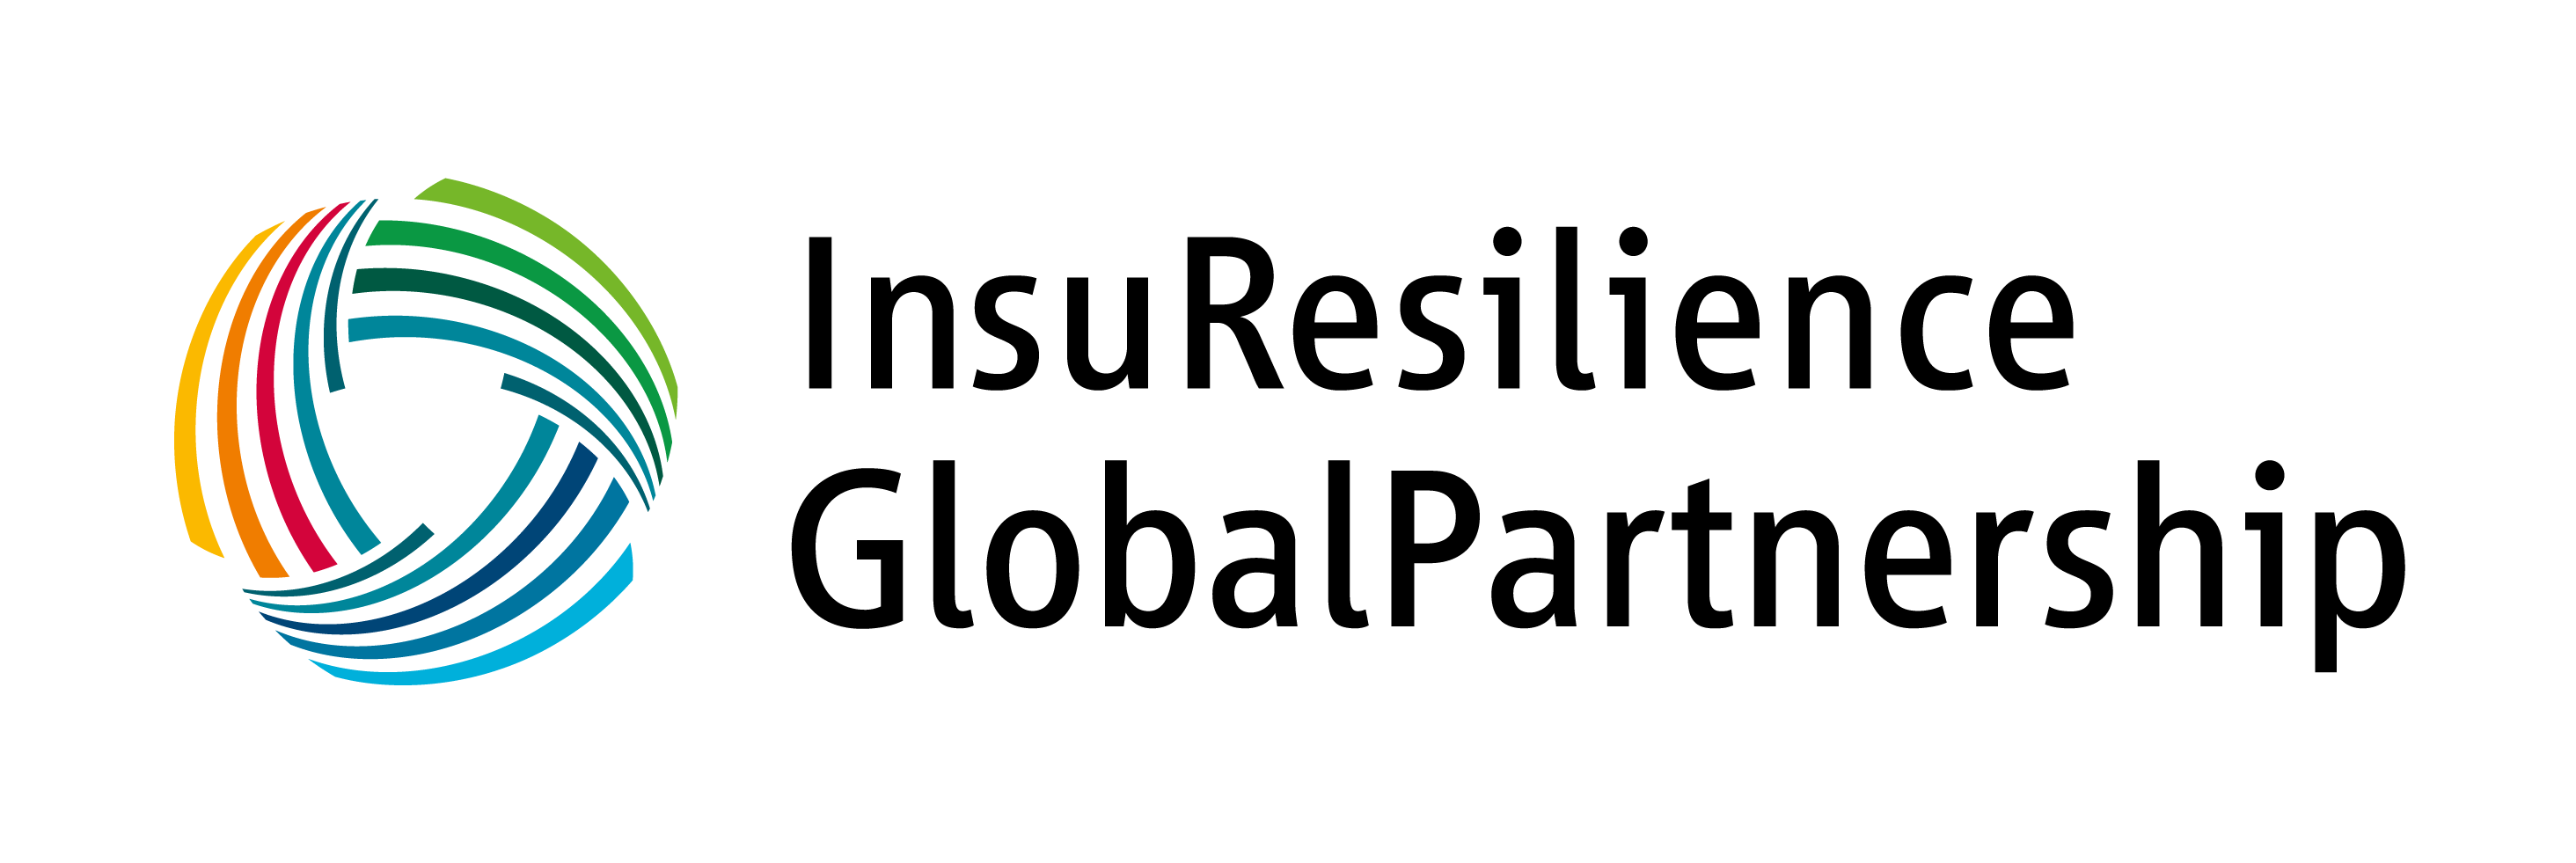 InsuResilience Global Partnership logo